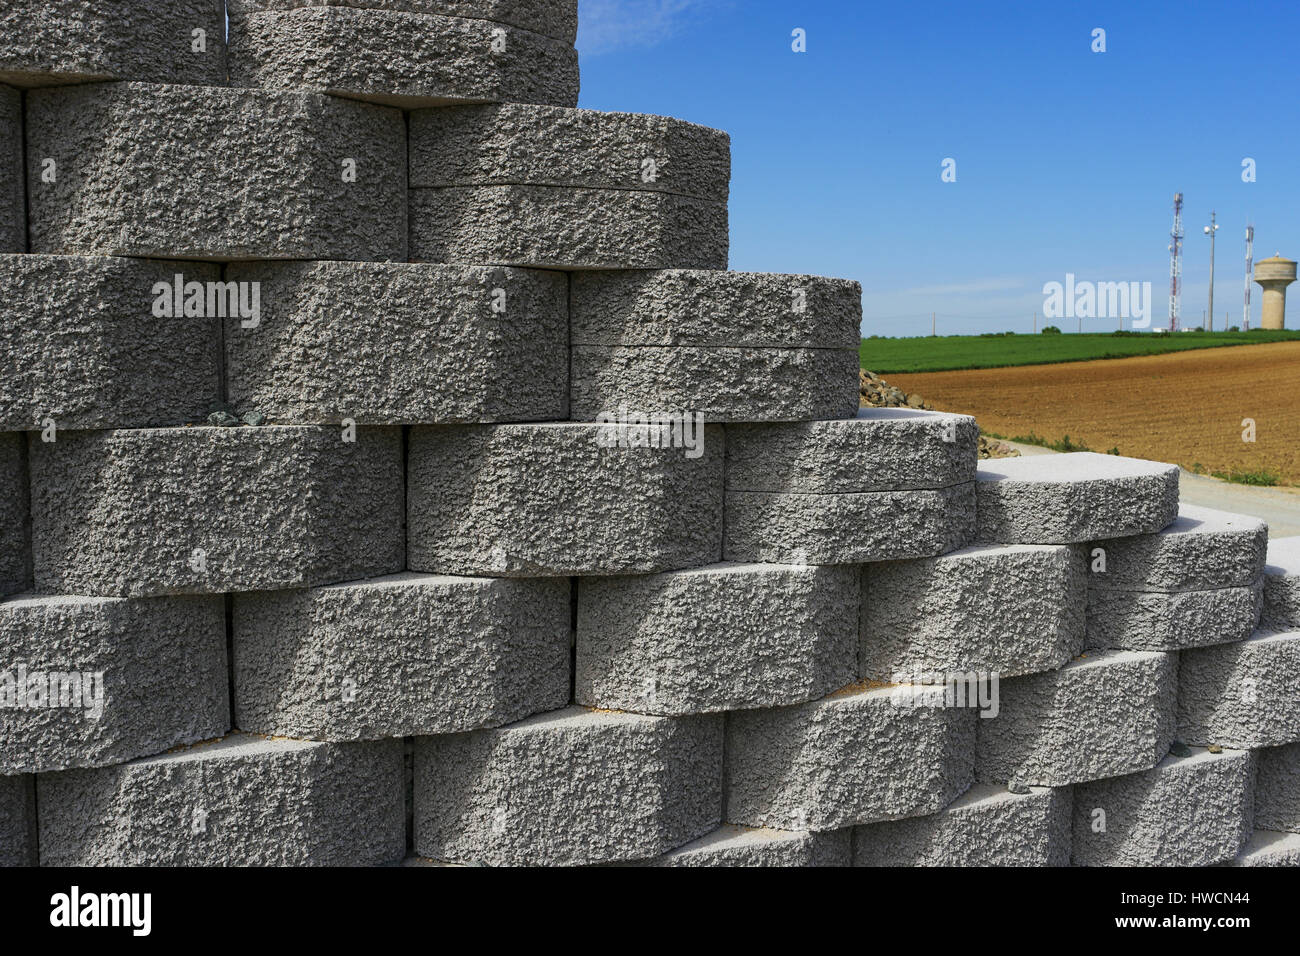 should concrete blocks be filled